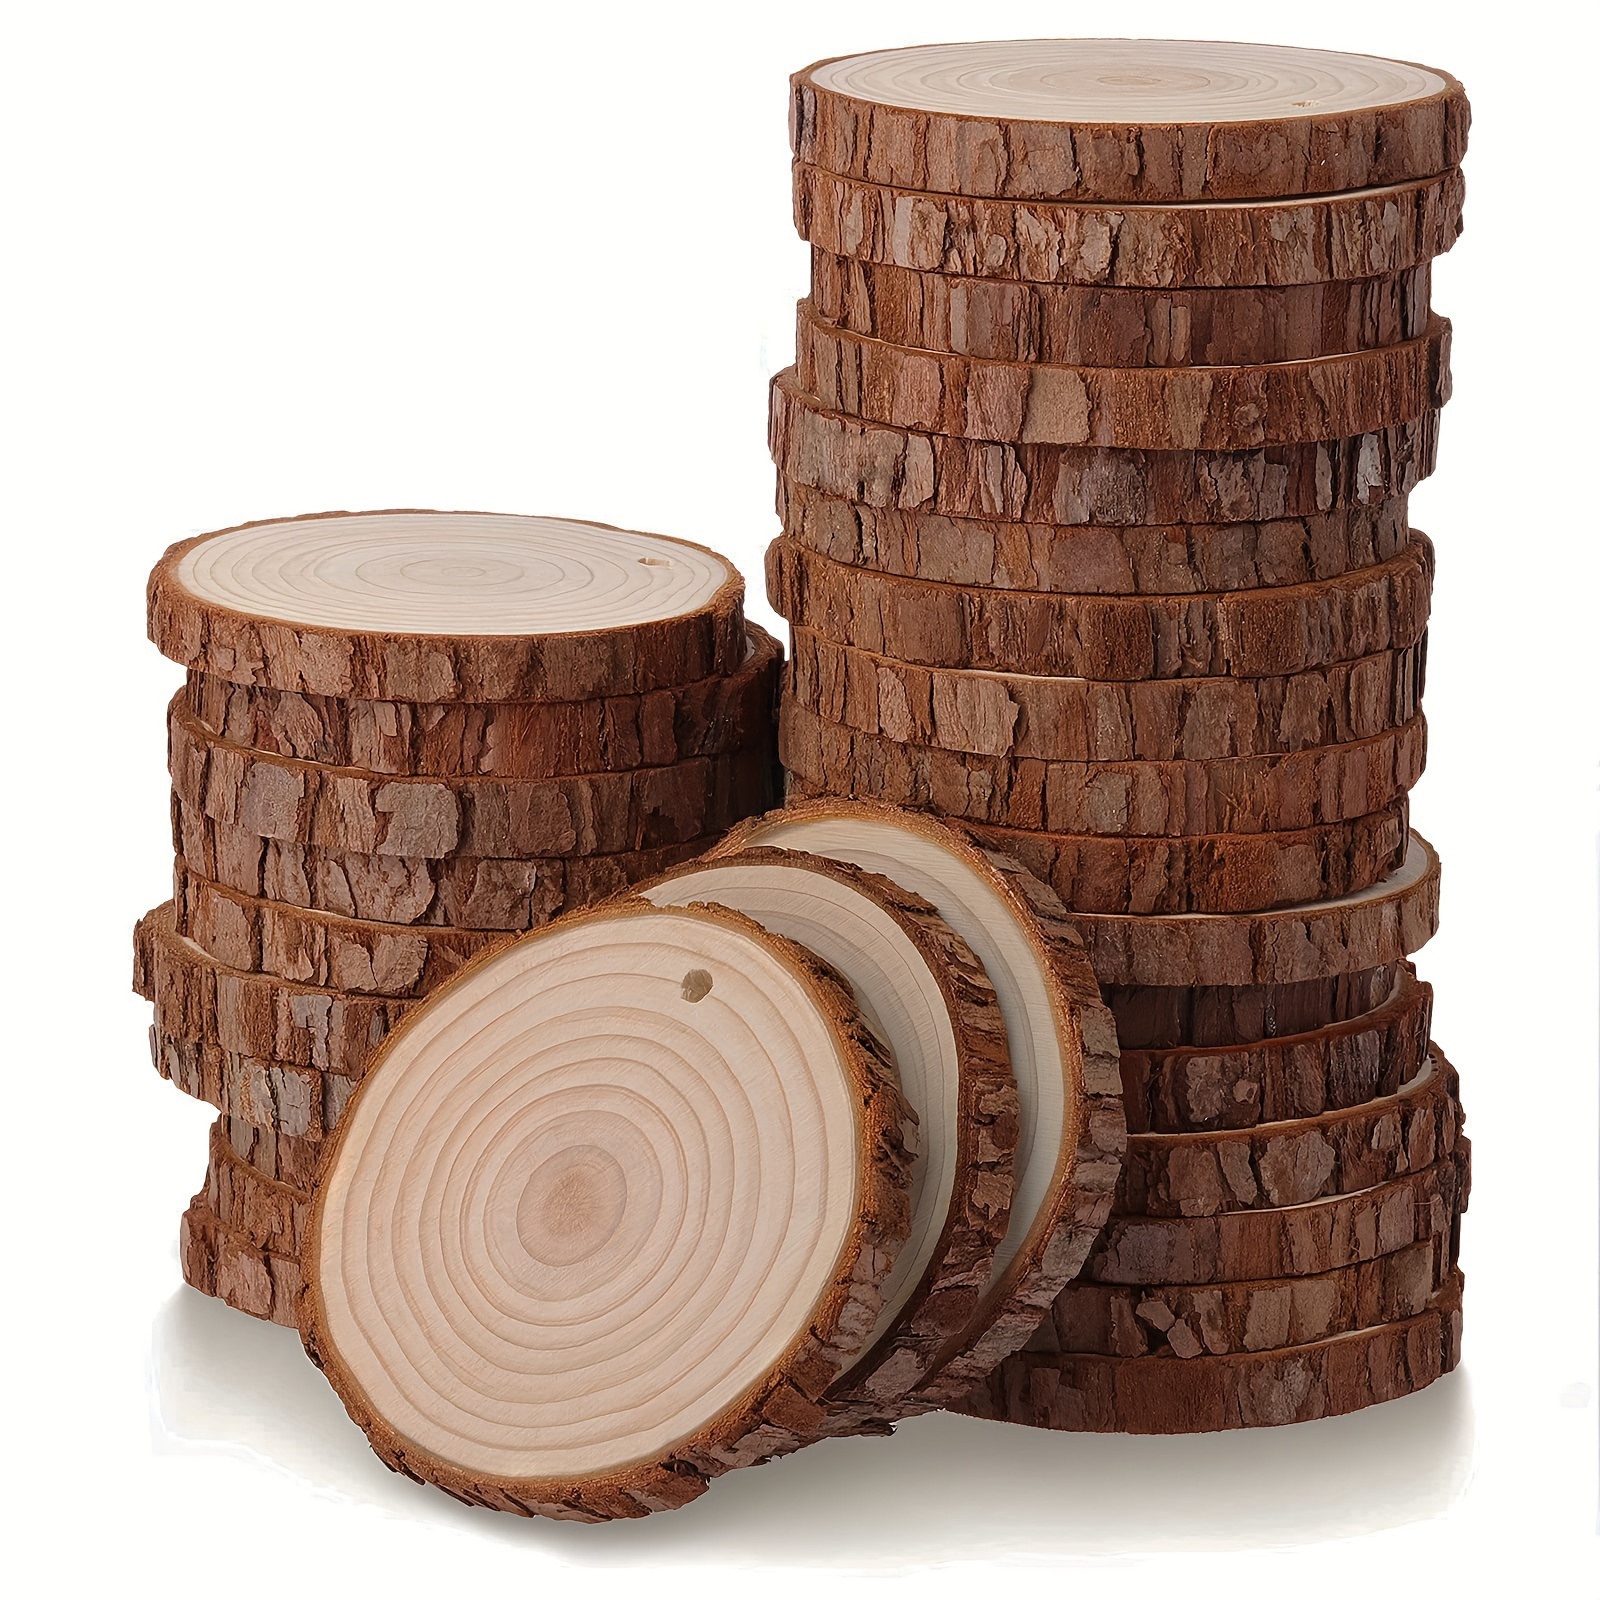 NOLITOY 20pcs Wood Crafts Wooden Shapes for Crafts Wood Flower Slices  Unfinished Wood Discs Wooden Pieces Wooden Pieces for Crafts Wooden  Ornaments